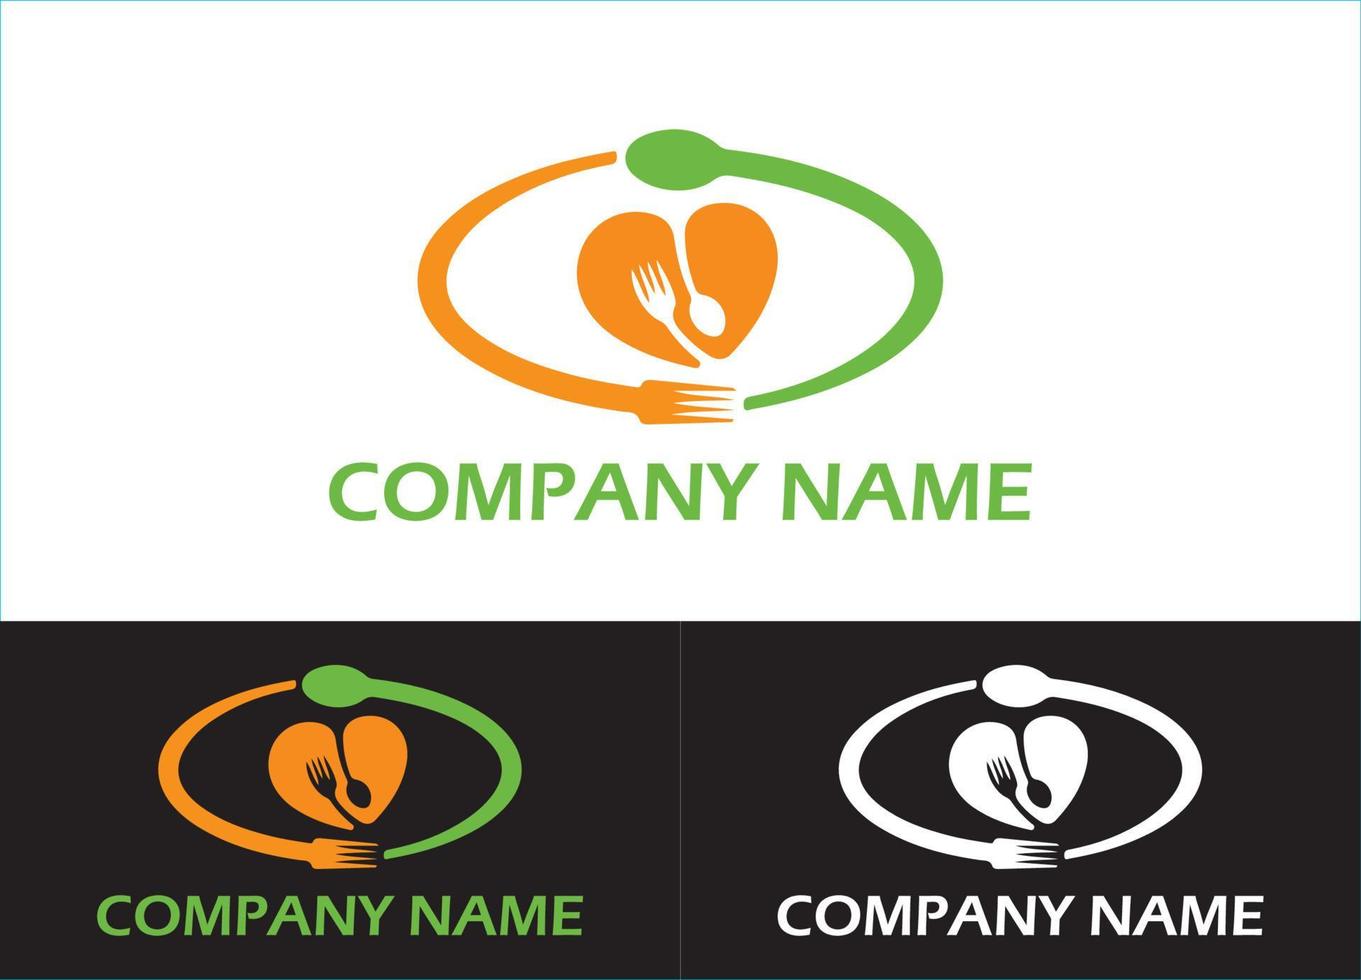 Restaurant Logo or Icon Design Vector Image Template